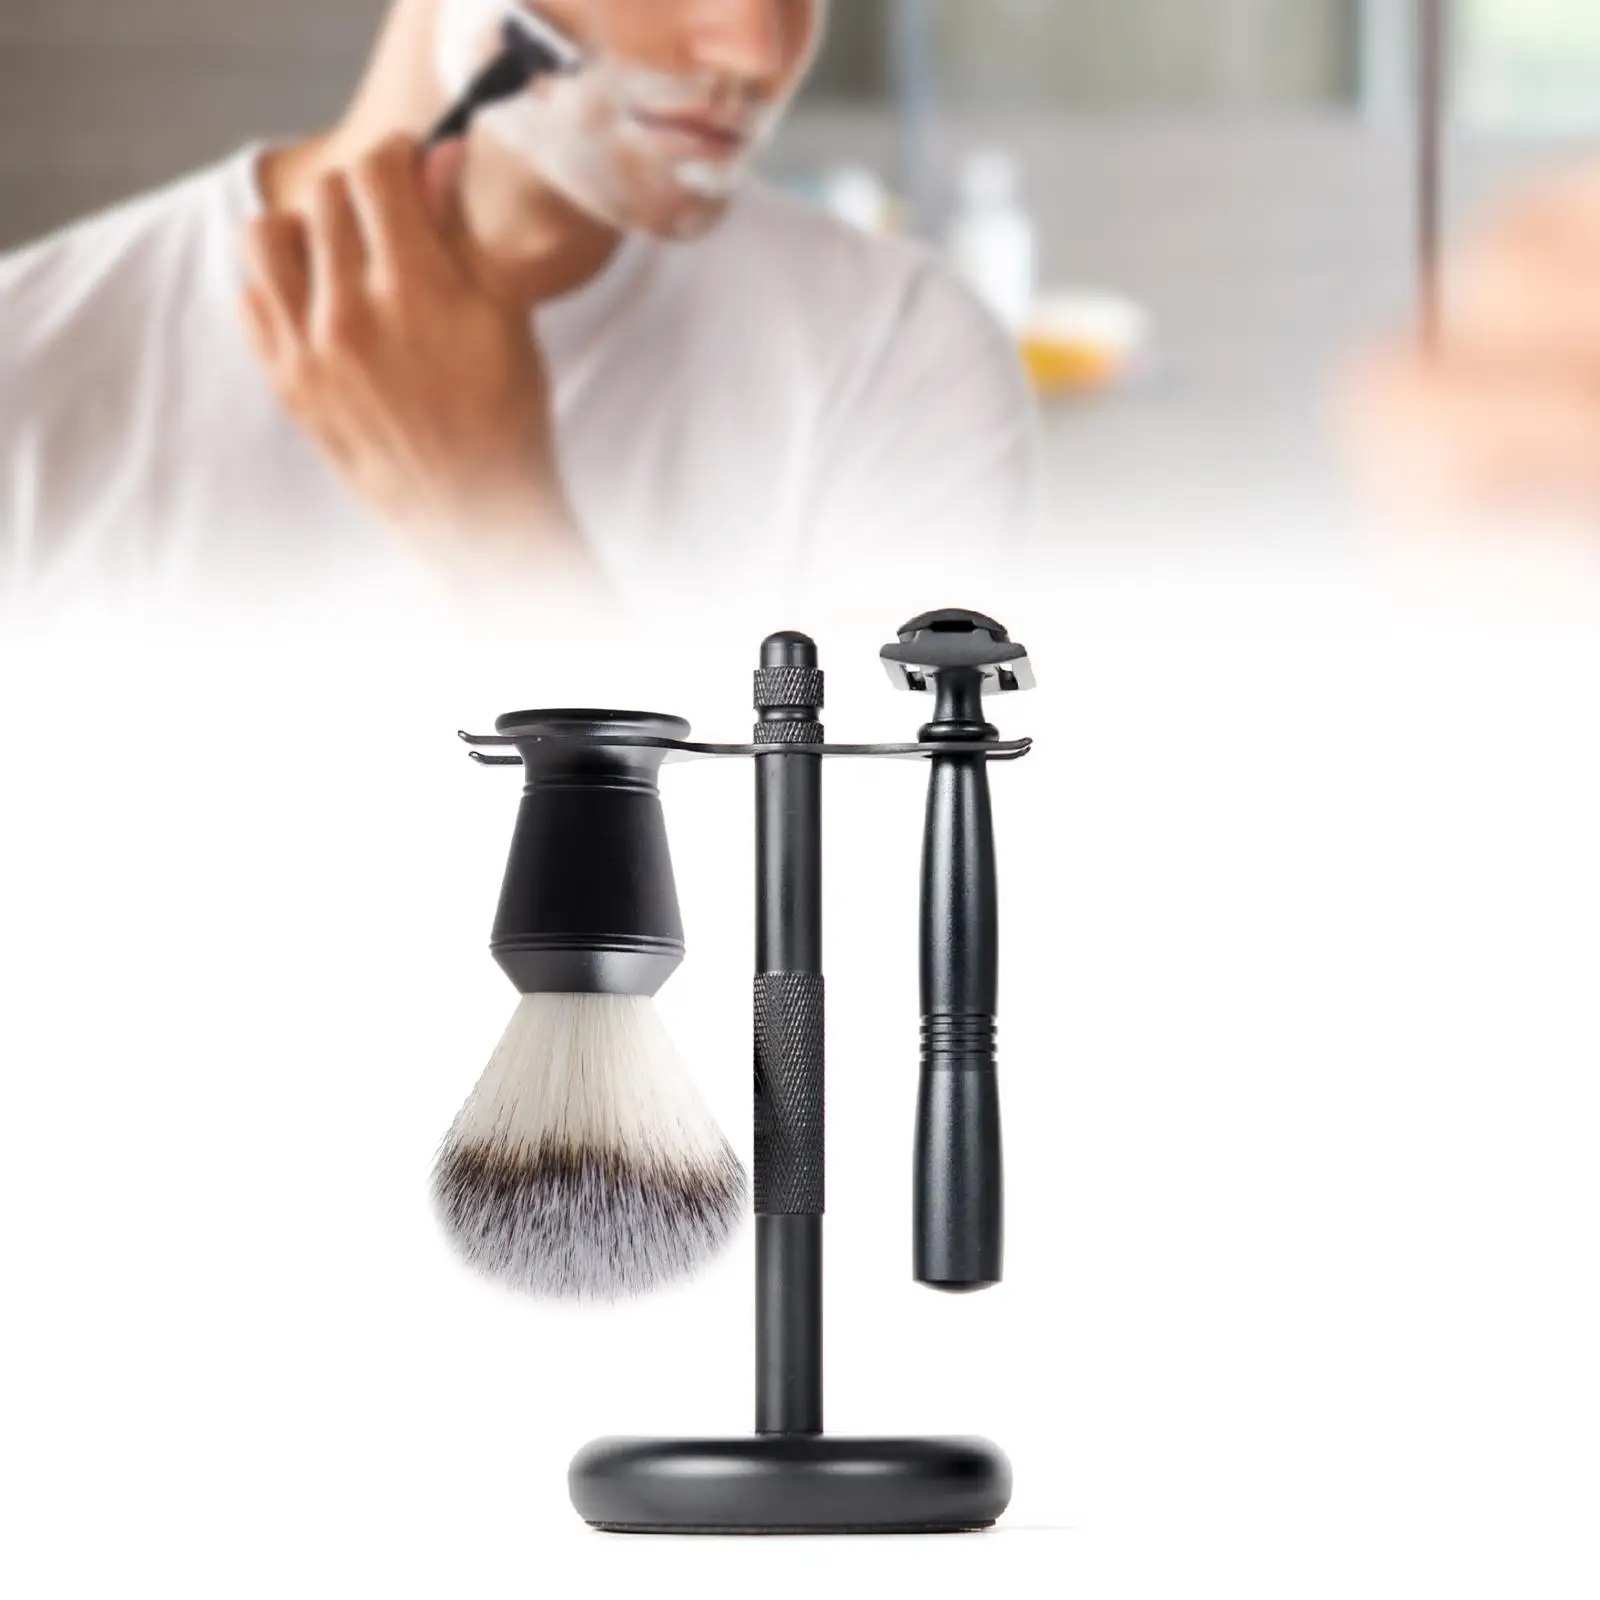 3Pcs Mens Shaving Set Black Color Elegant Razor Shaving Kit Shaving Razor+ Stand Holder +shaving Brush Set for Dad Boyfriend